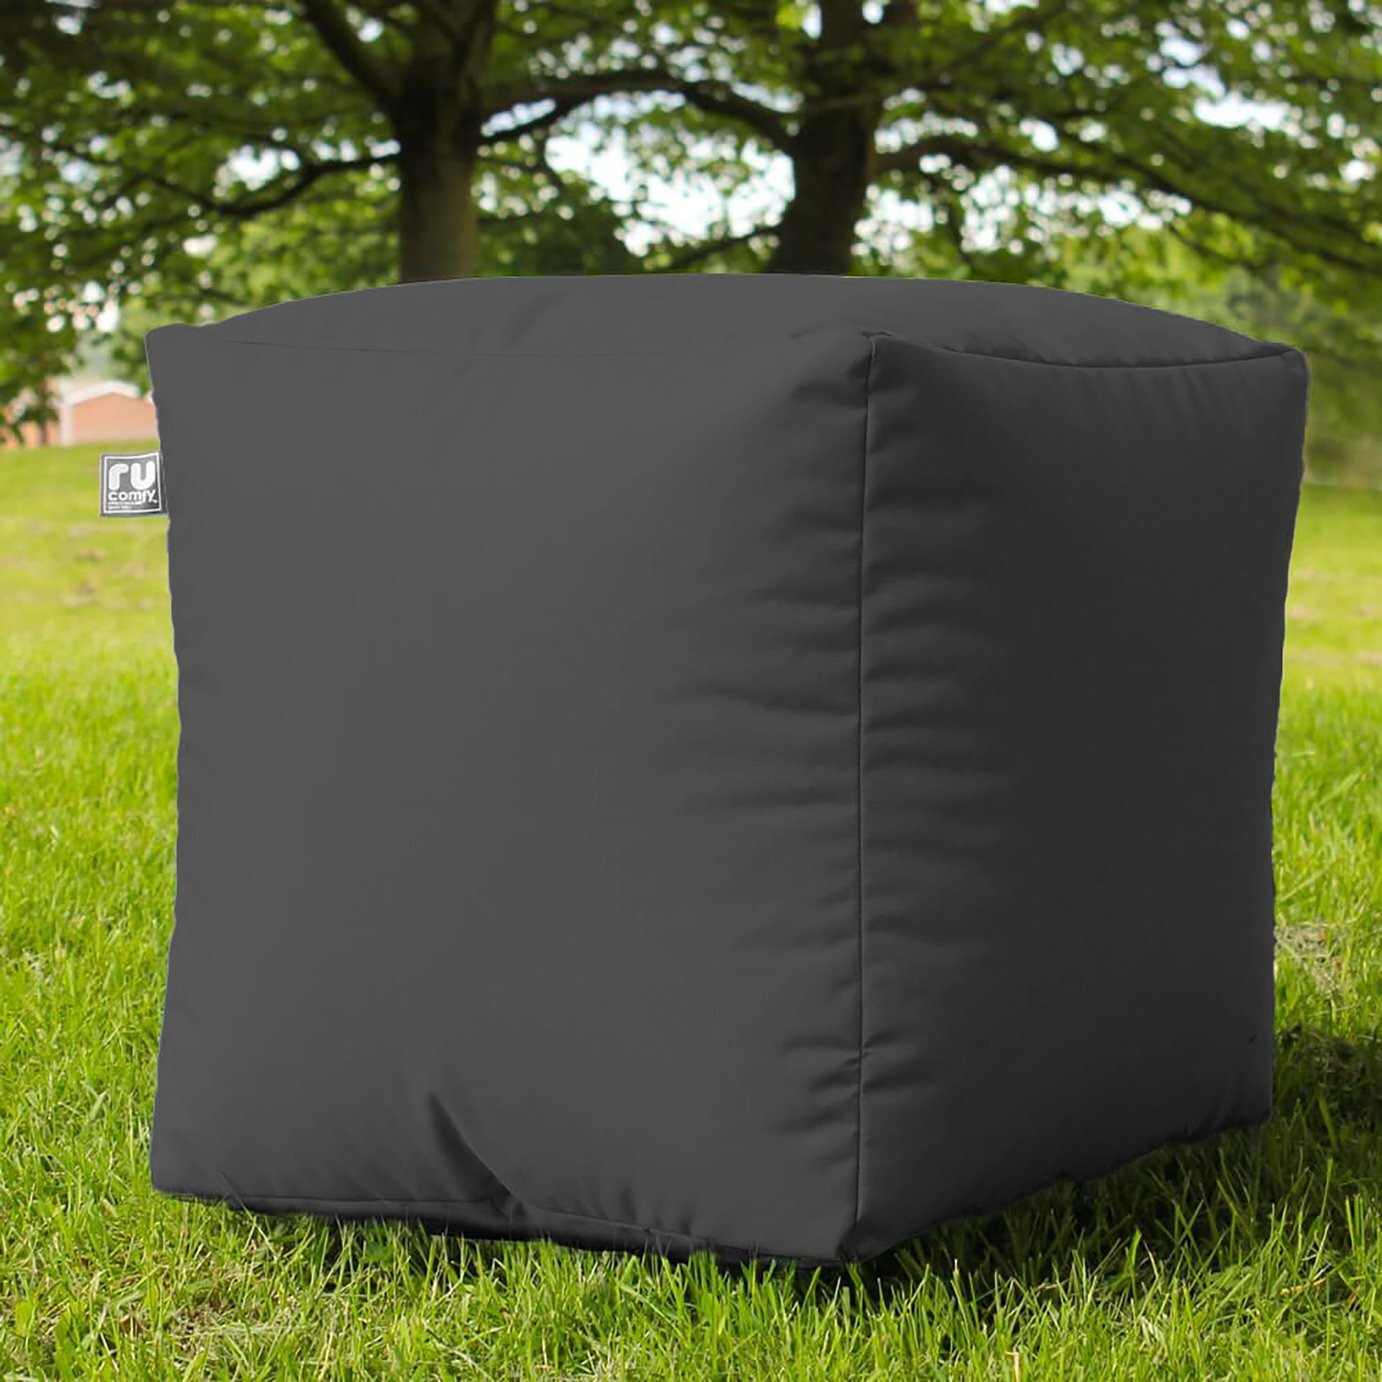 rucomfy Indoor Outdoor Cube Bean Bag - Dark Grey - image 1